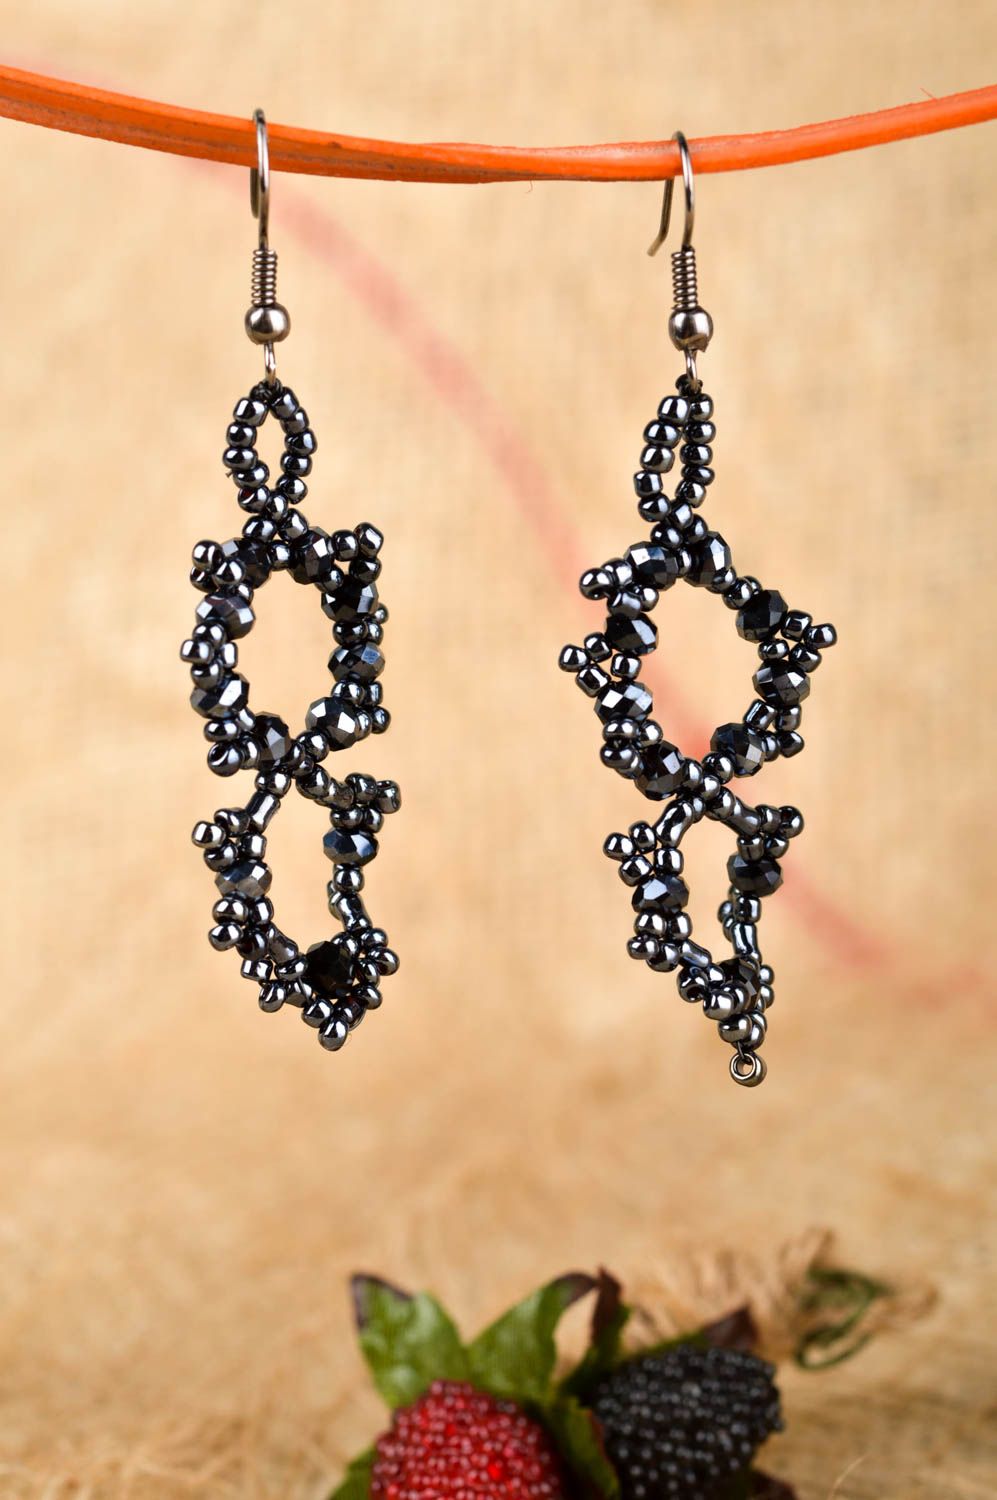 Homemade jewelry earrings for women stylish earrings designer accessories photo 1